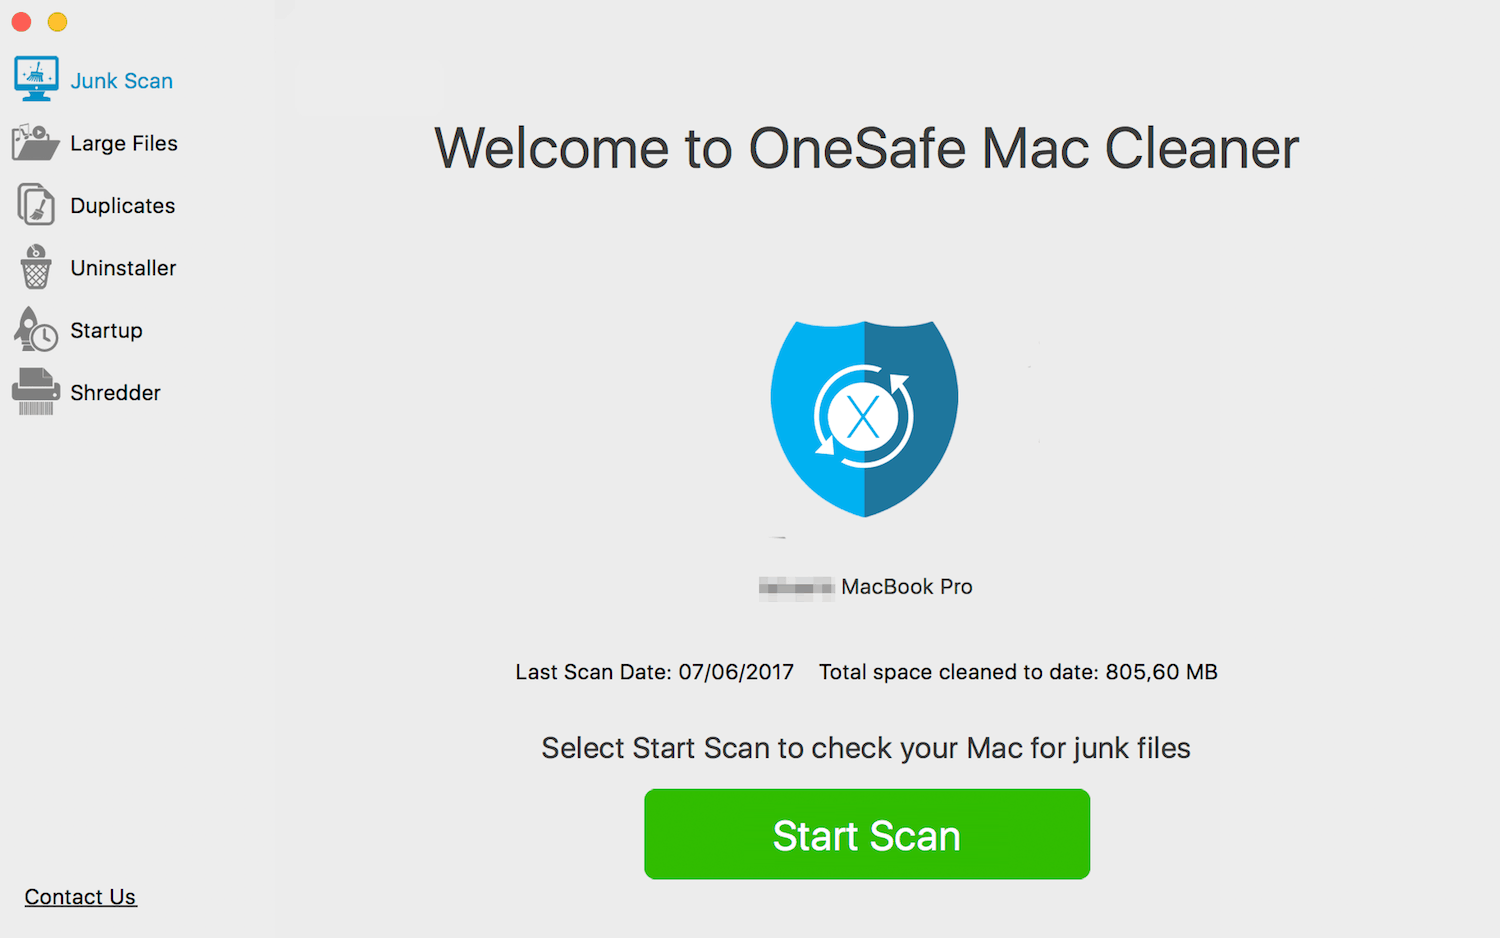 imymac’s mac cleaner scam